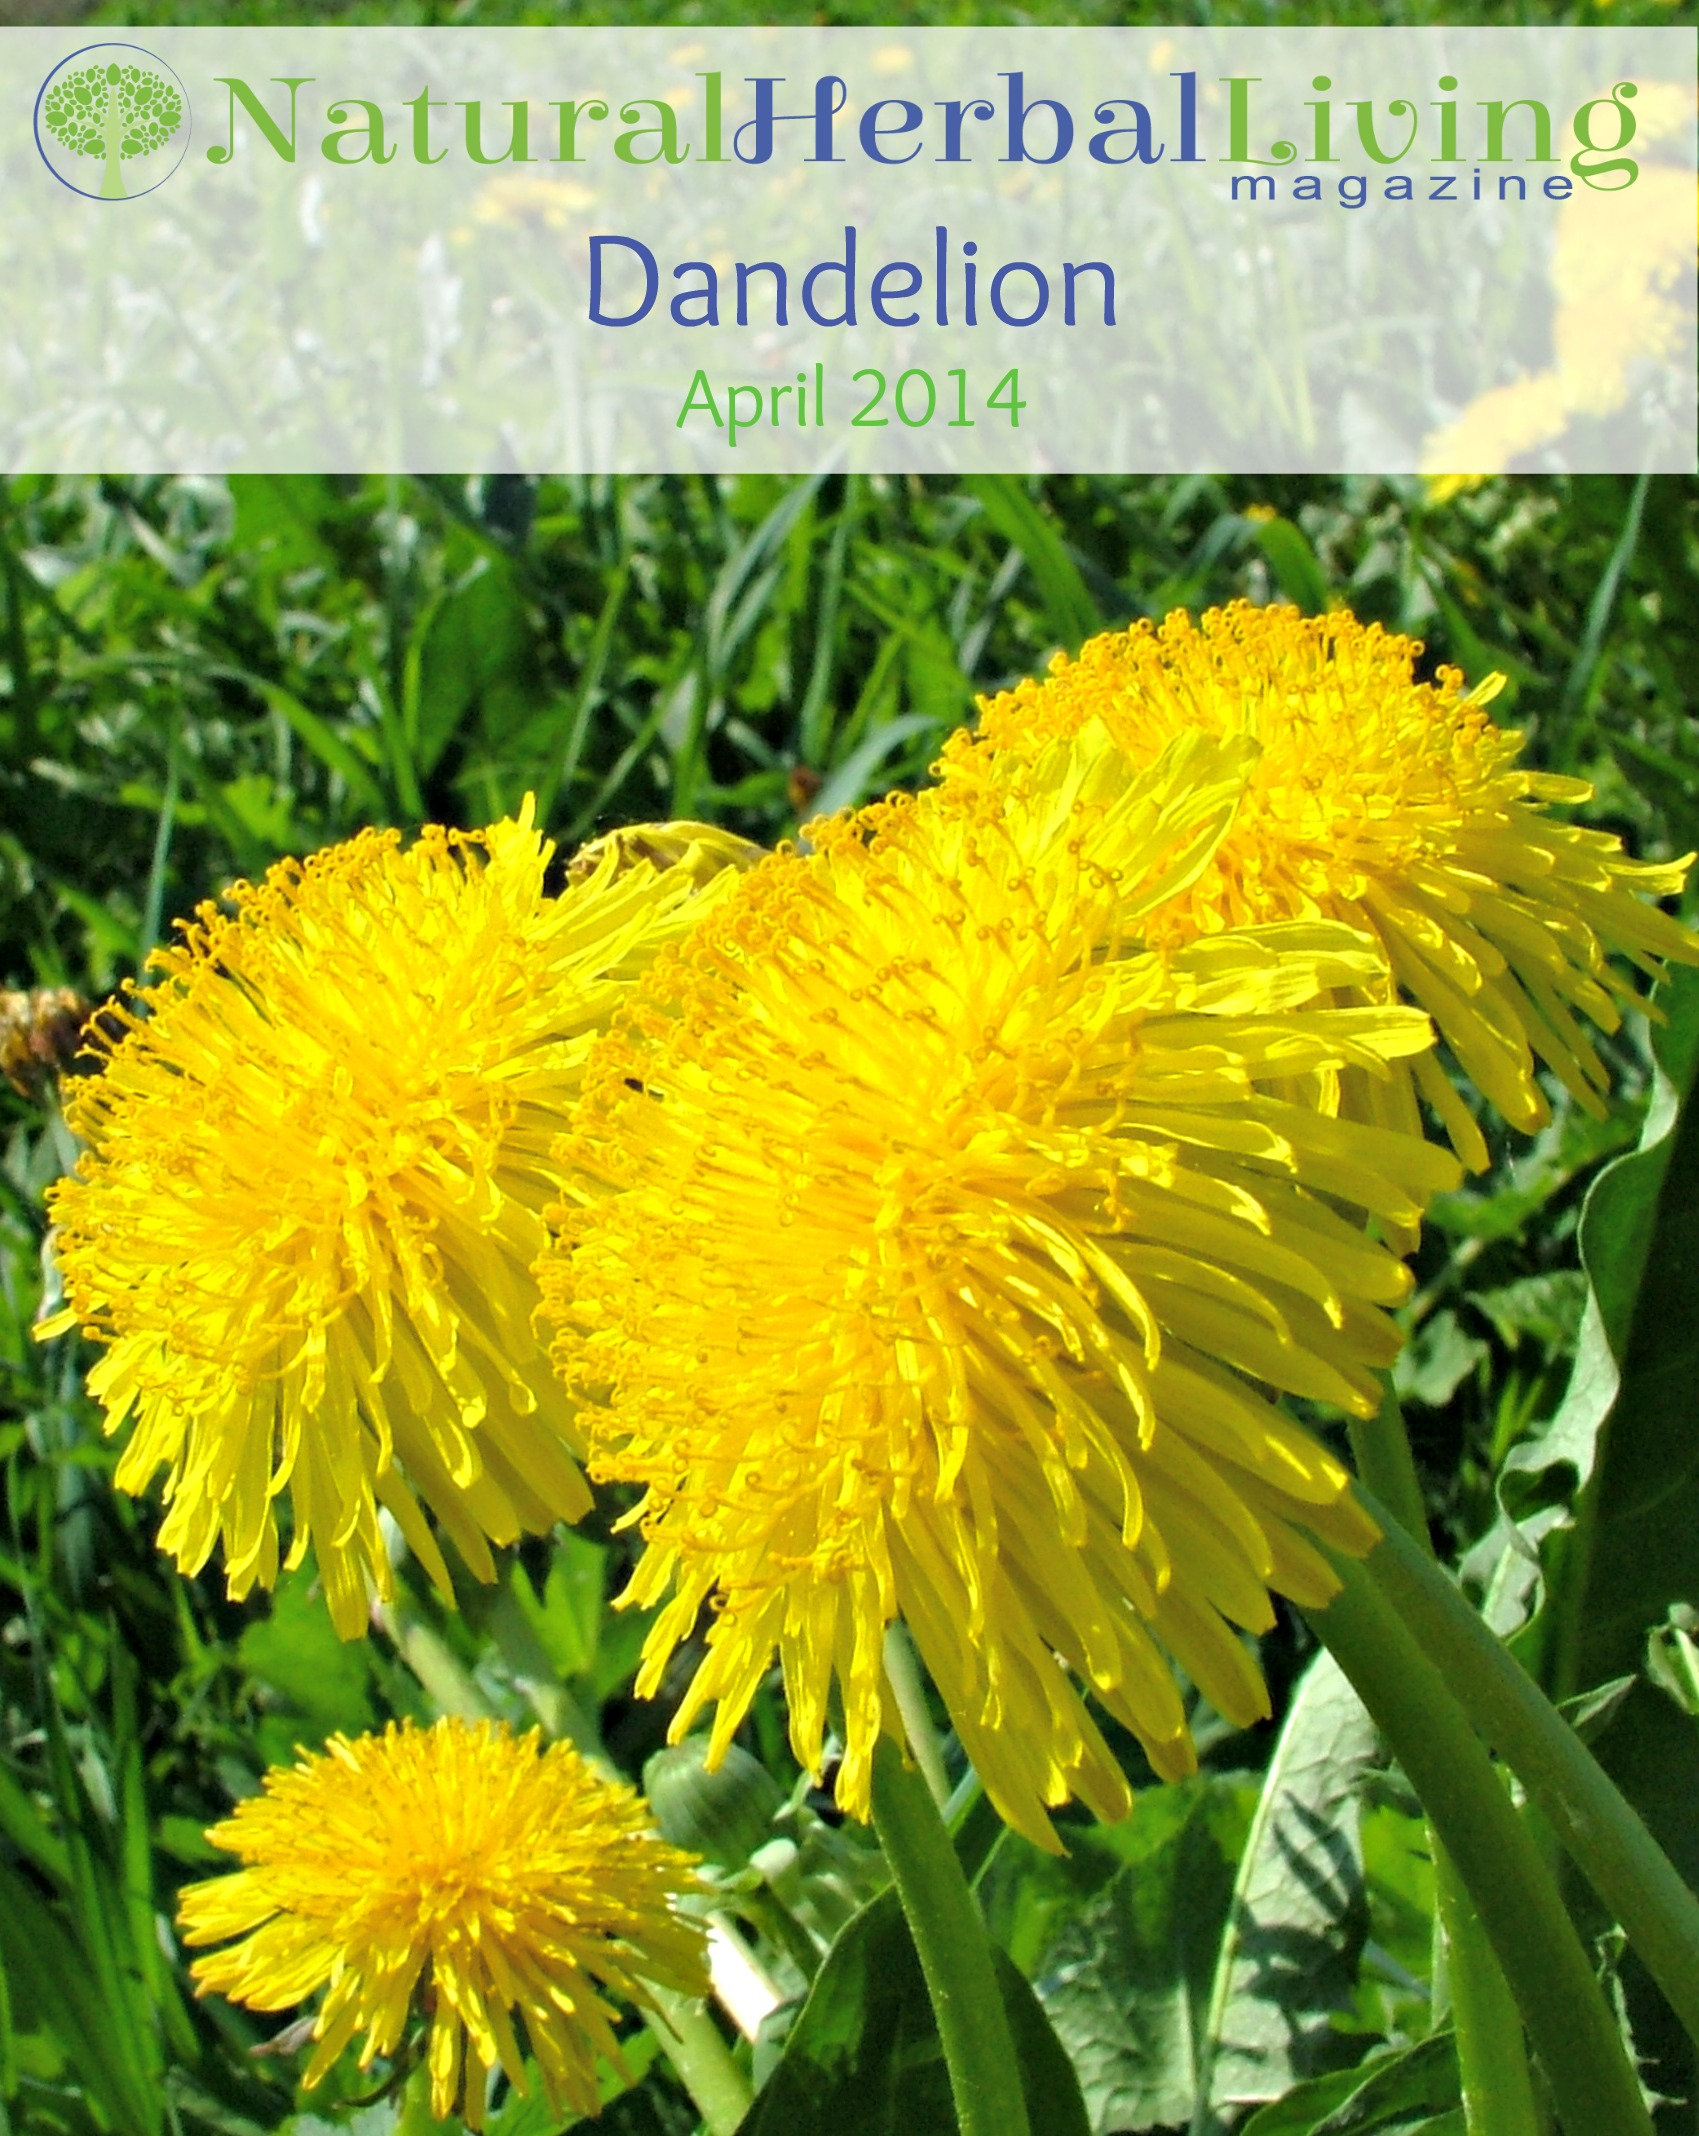 Dandelion photo